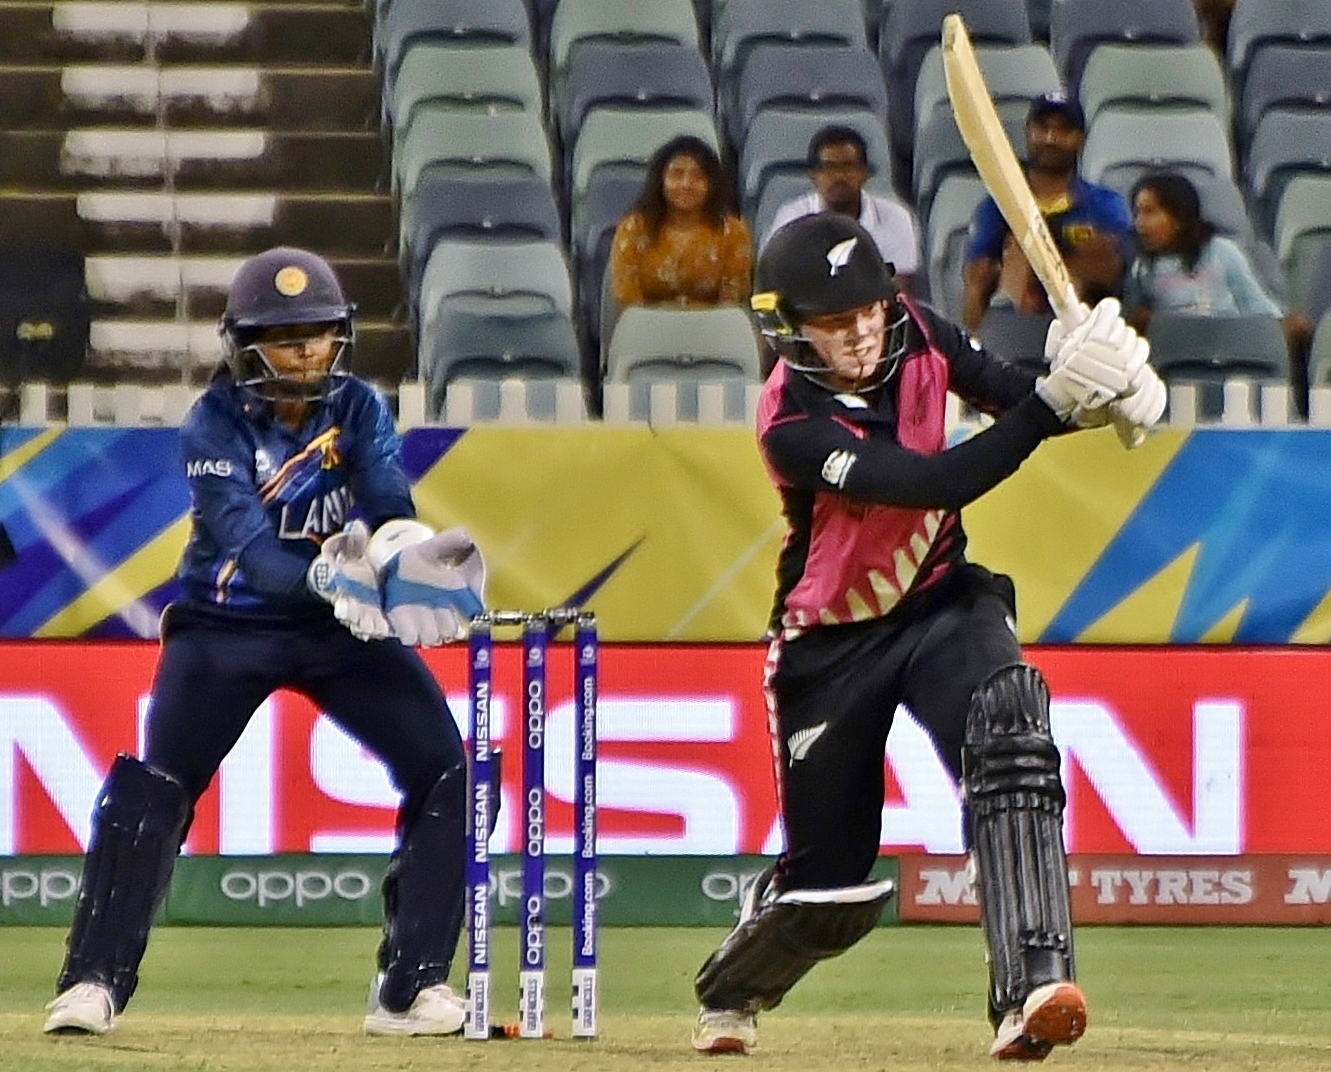 New Zealand's female batsman hitting a shot